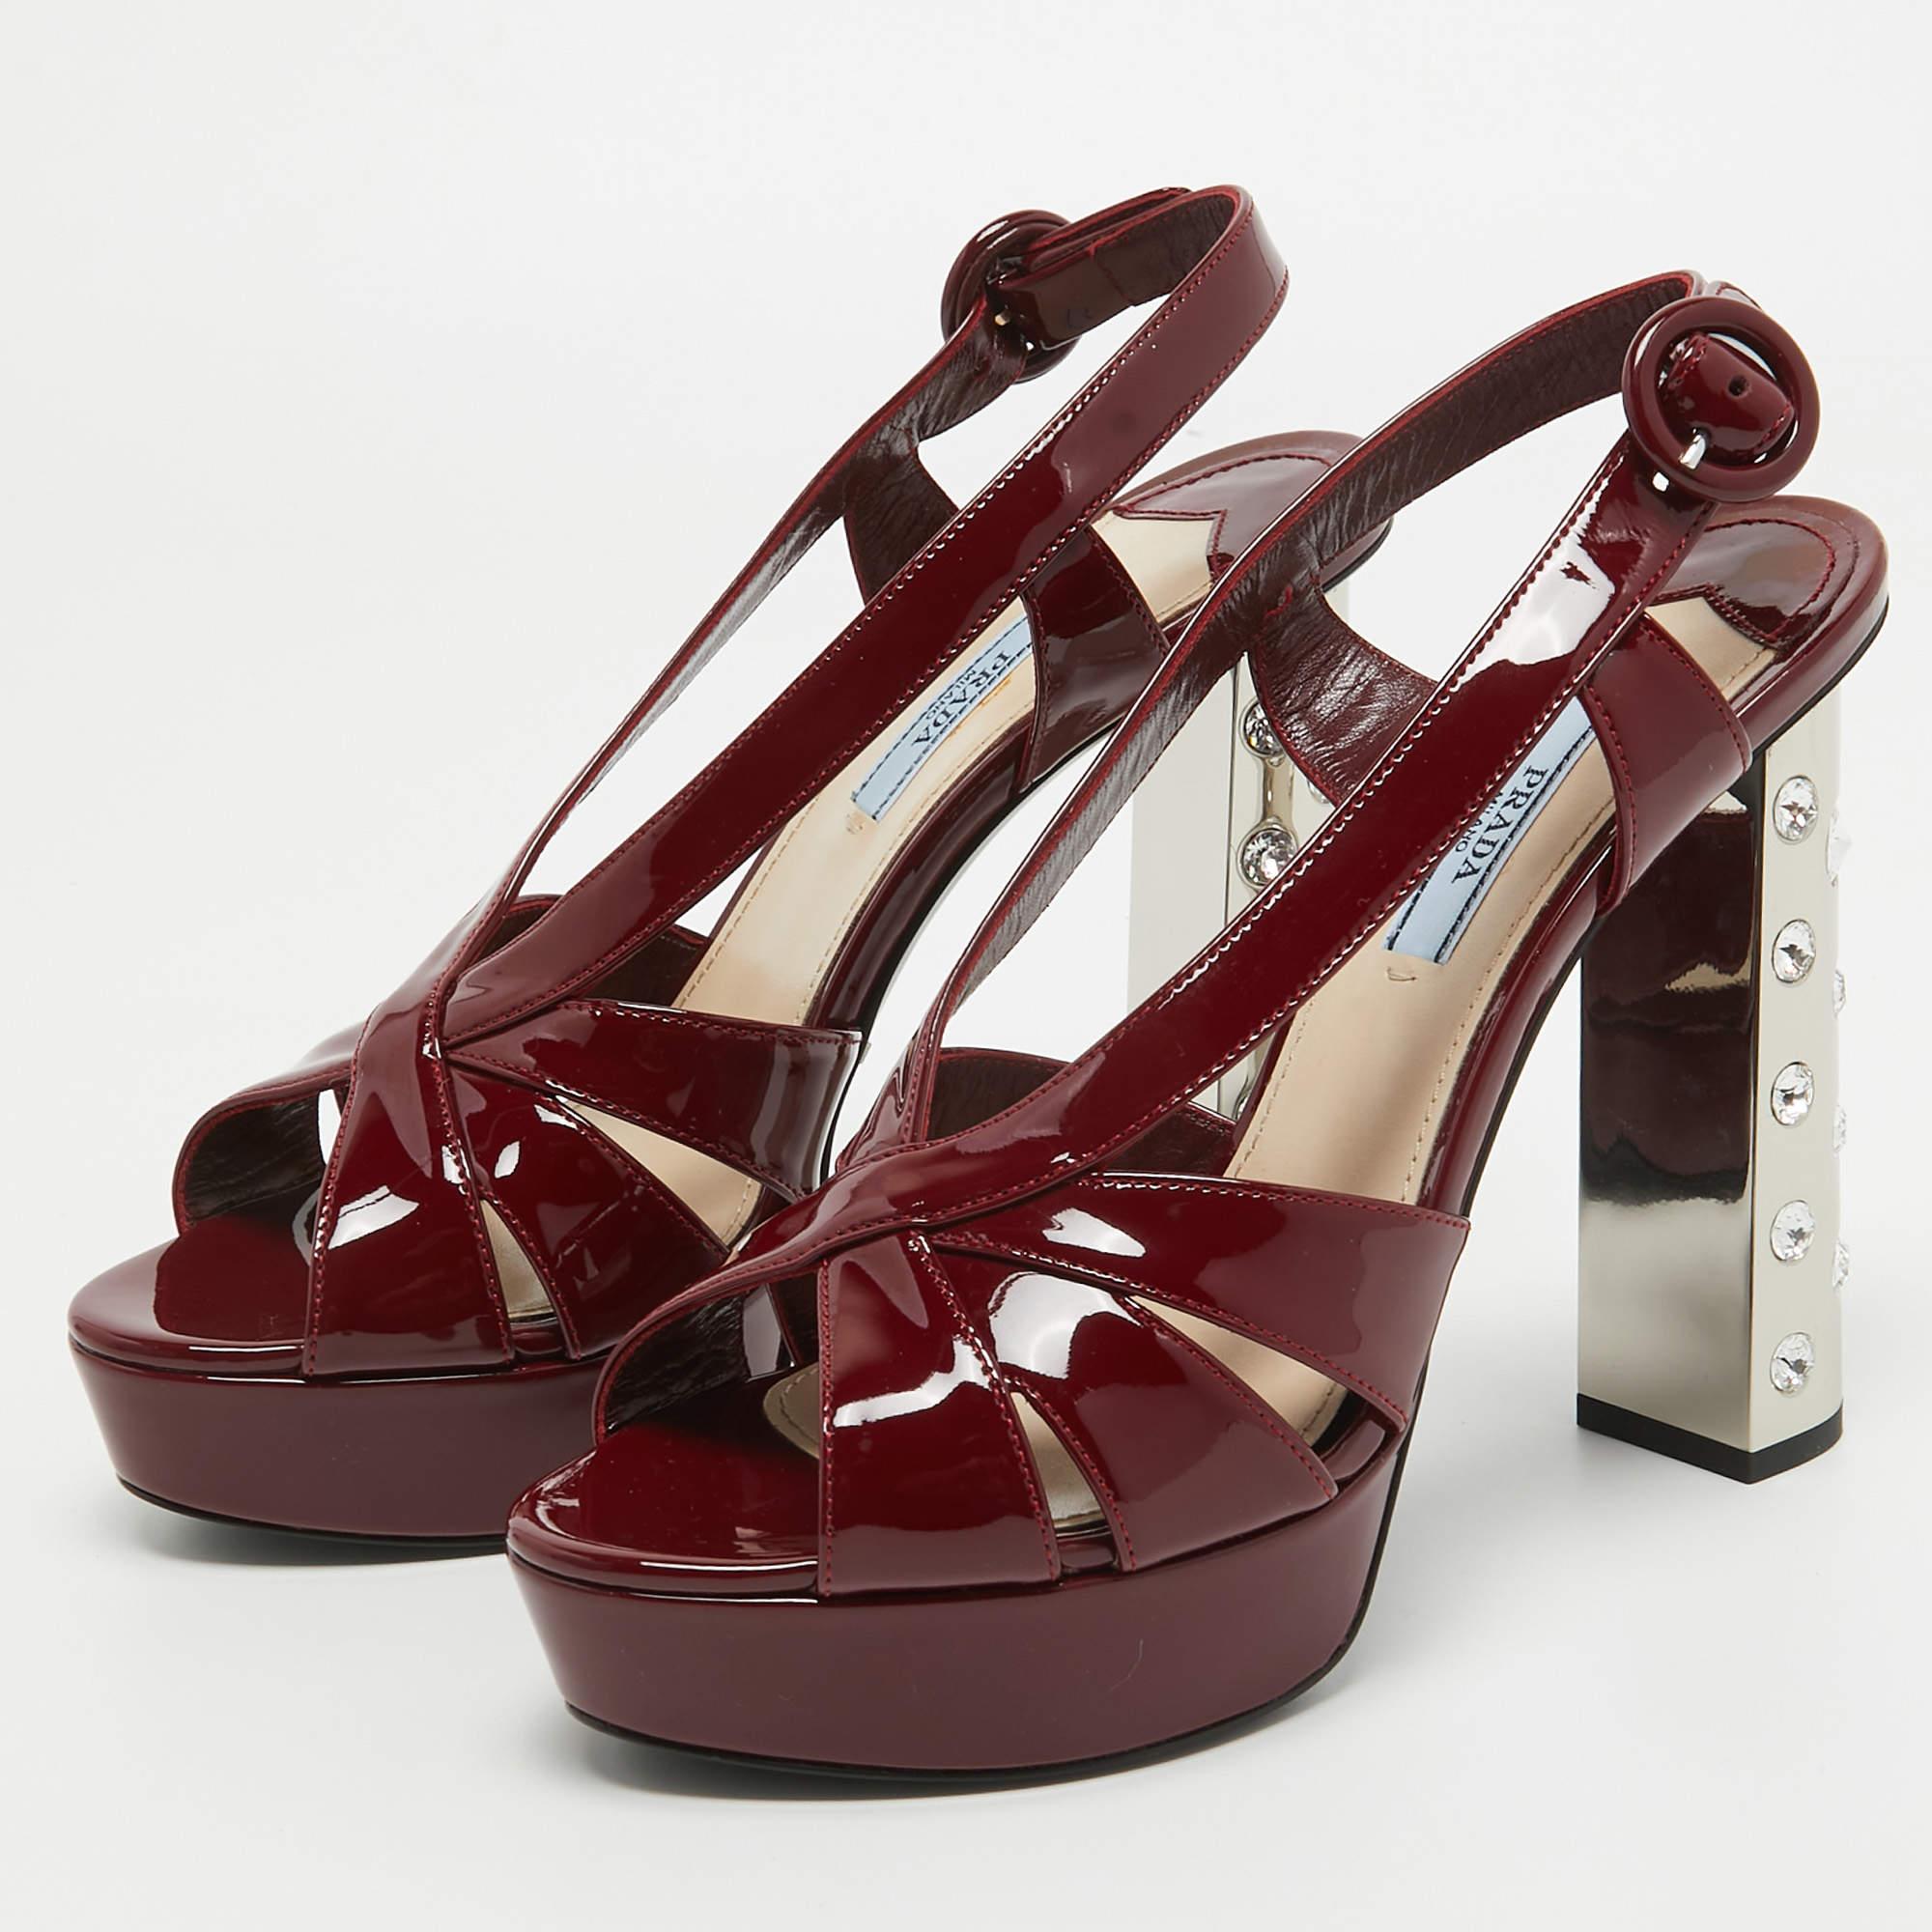 Prada Burgundy Patent Leather Strappy Platform Sandals Size 38 5